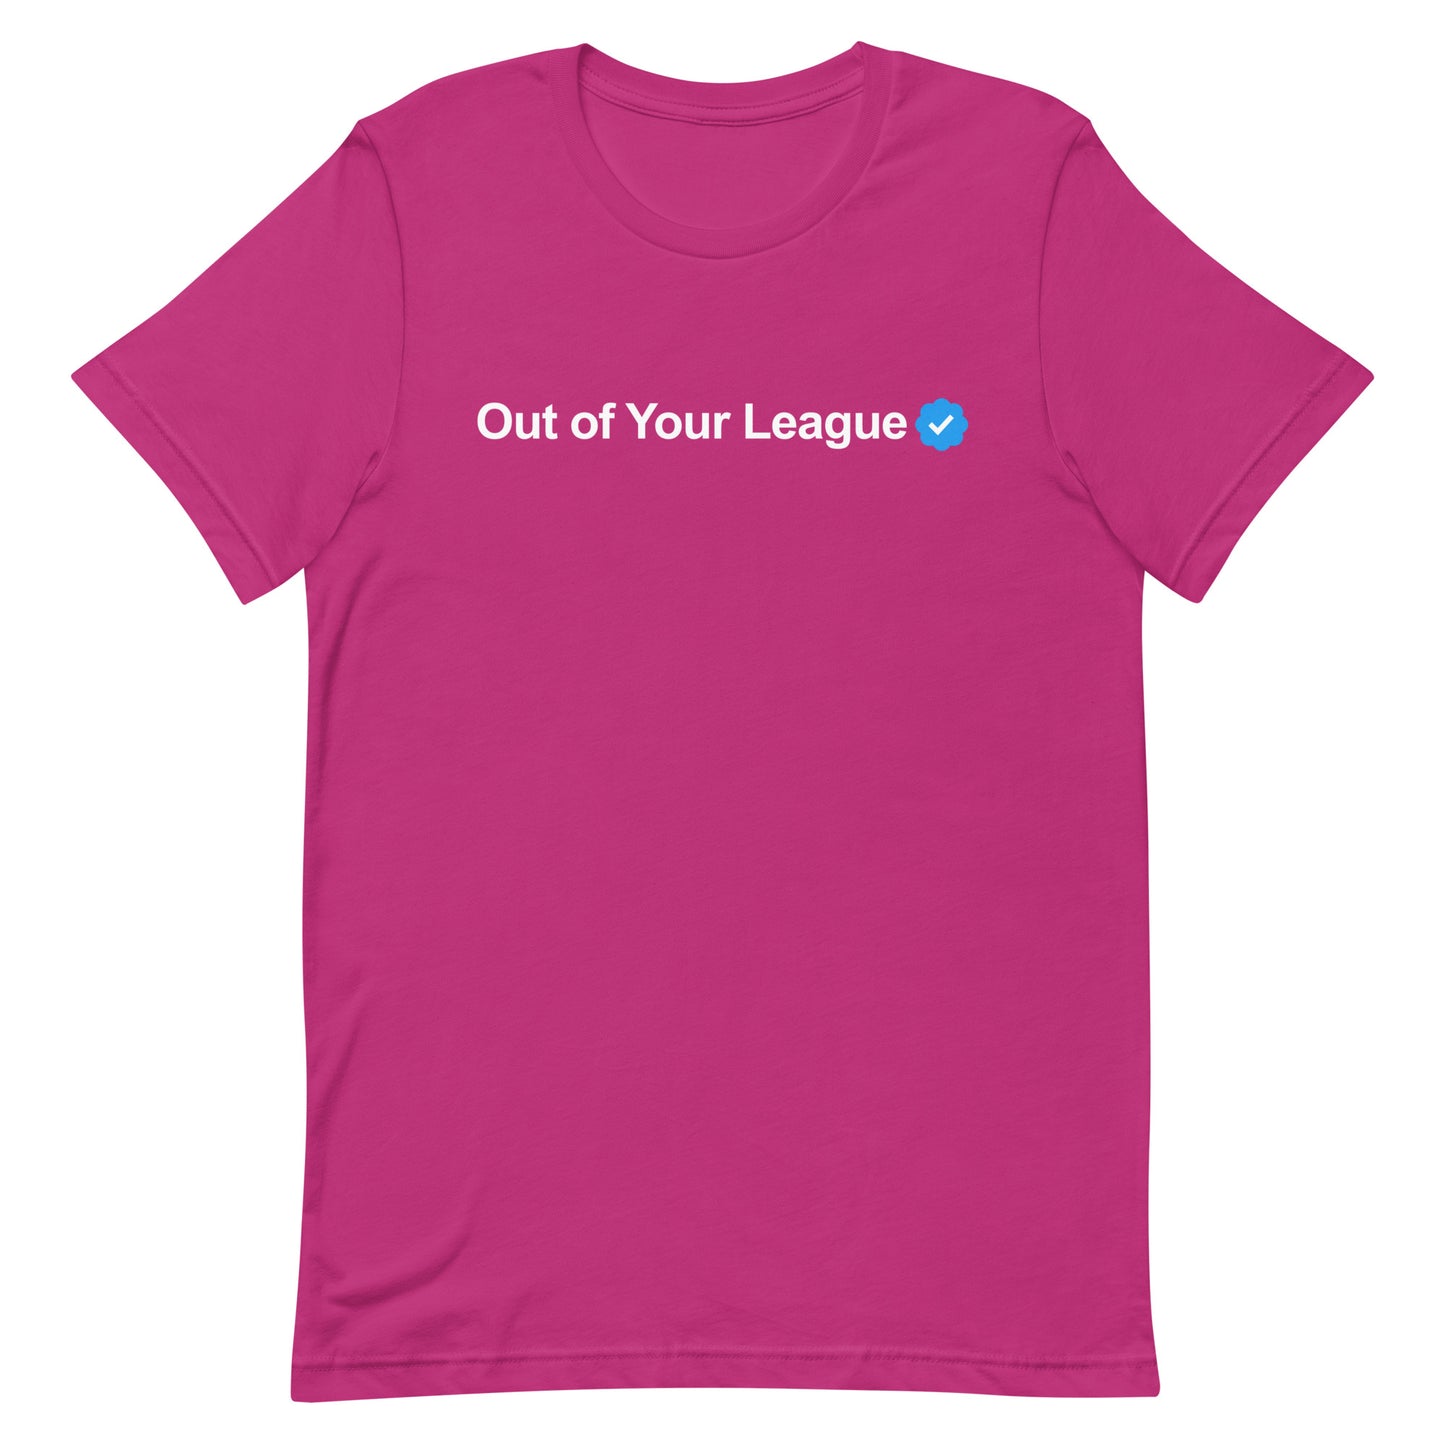 Out of Your League Unisex t-shirt